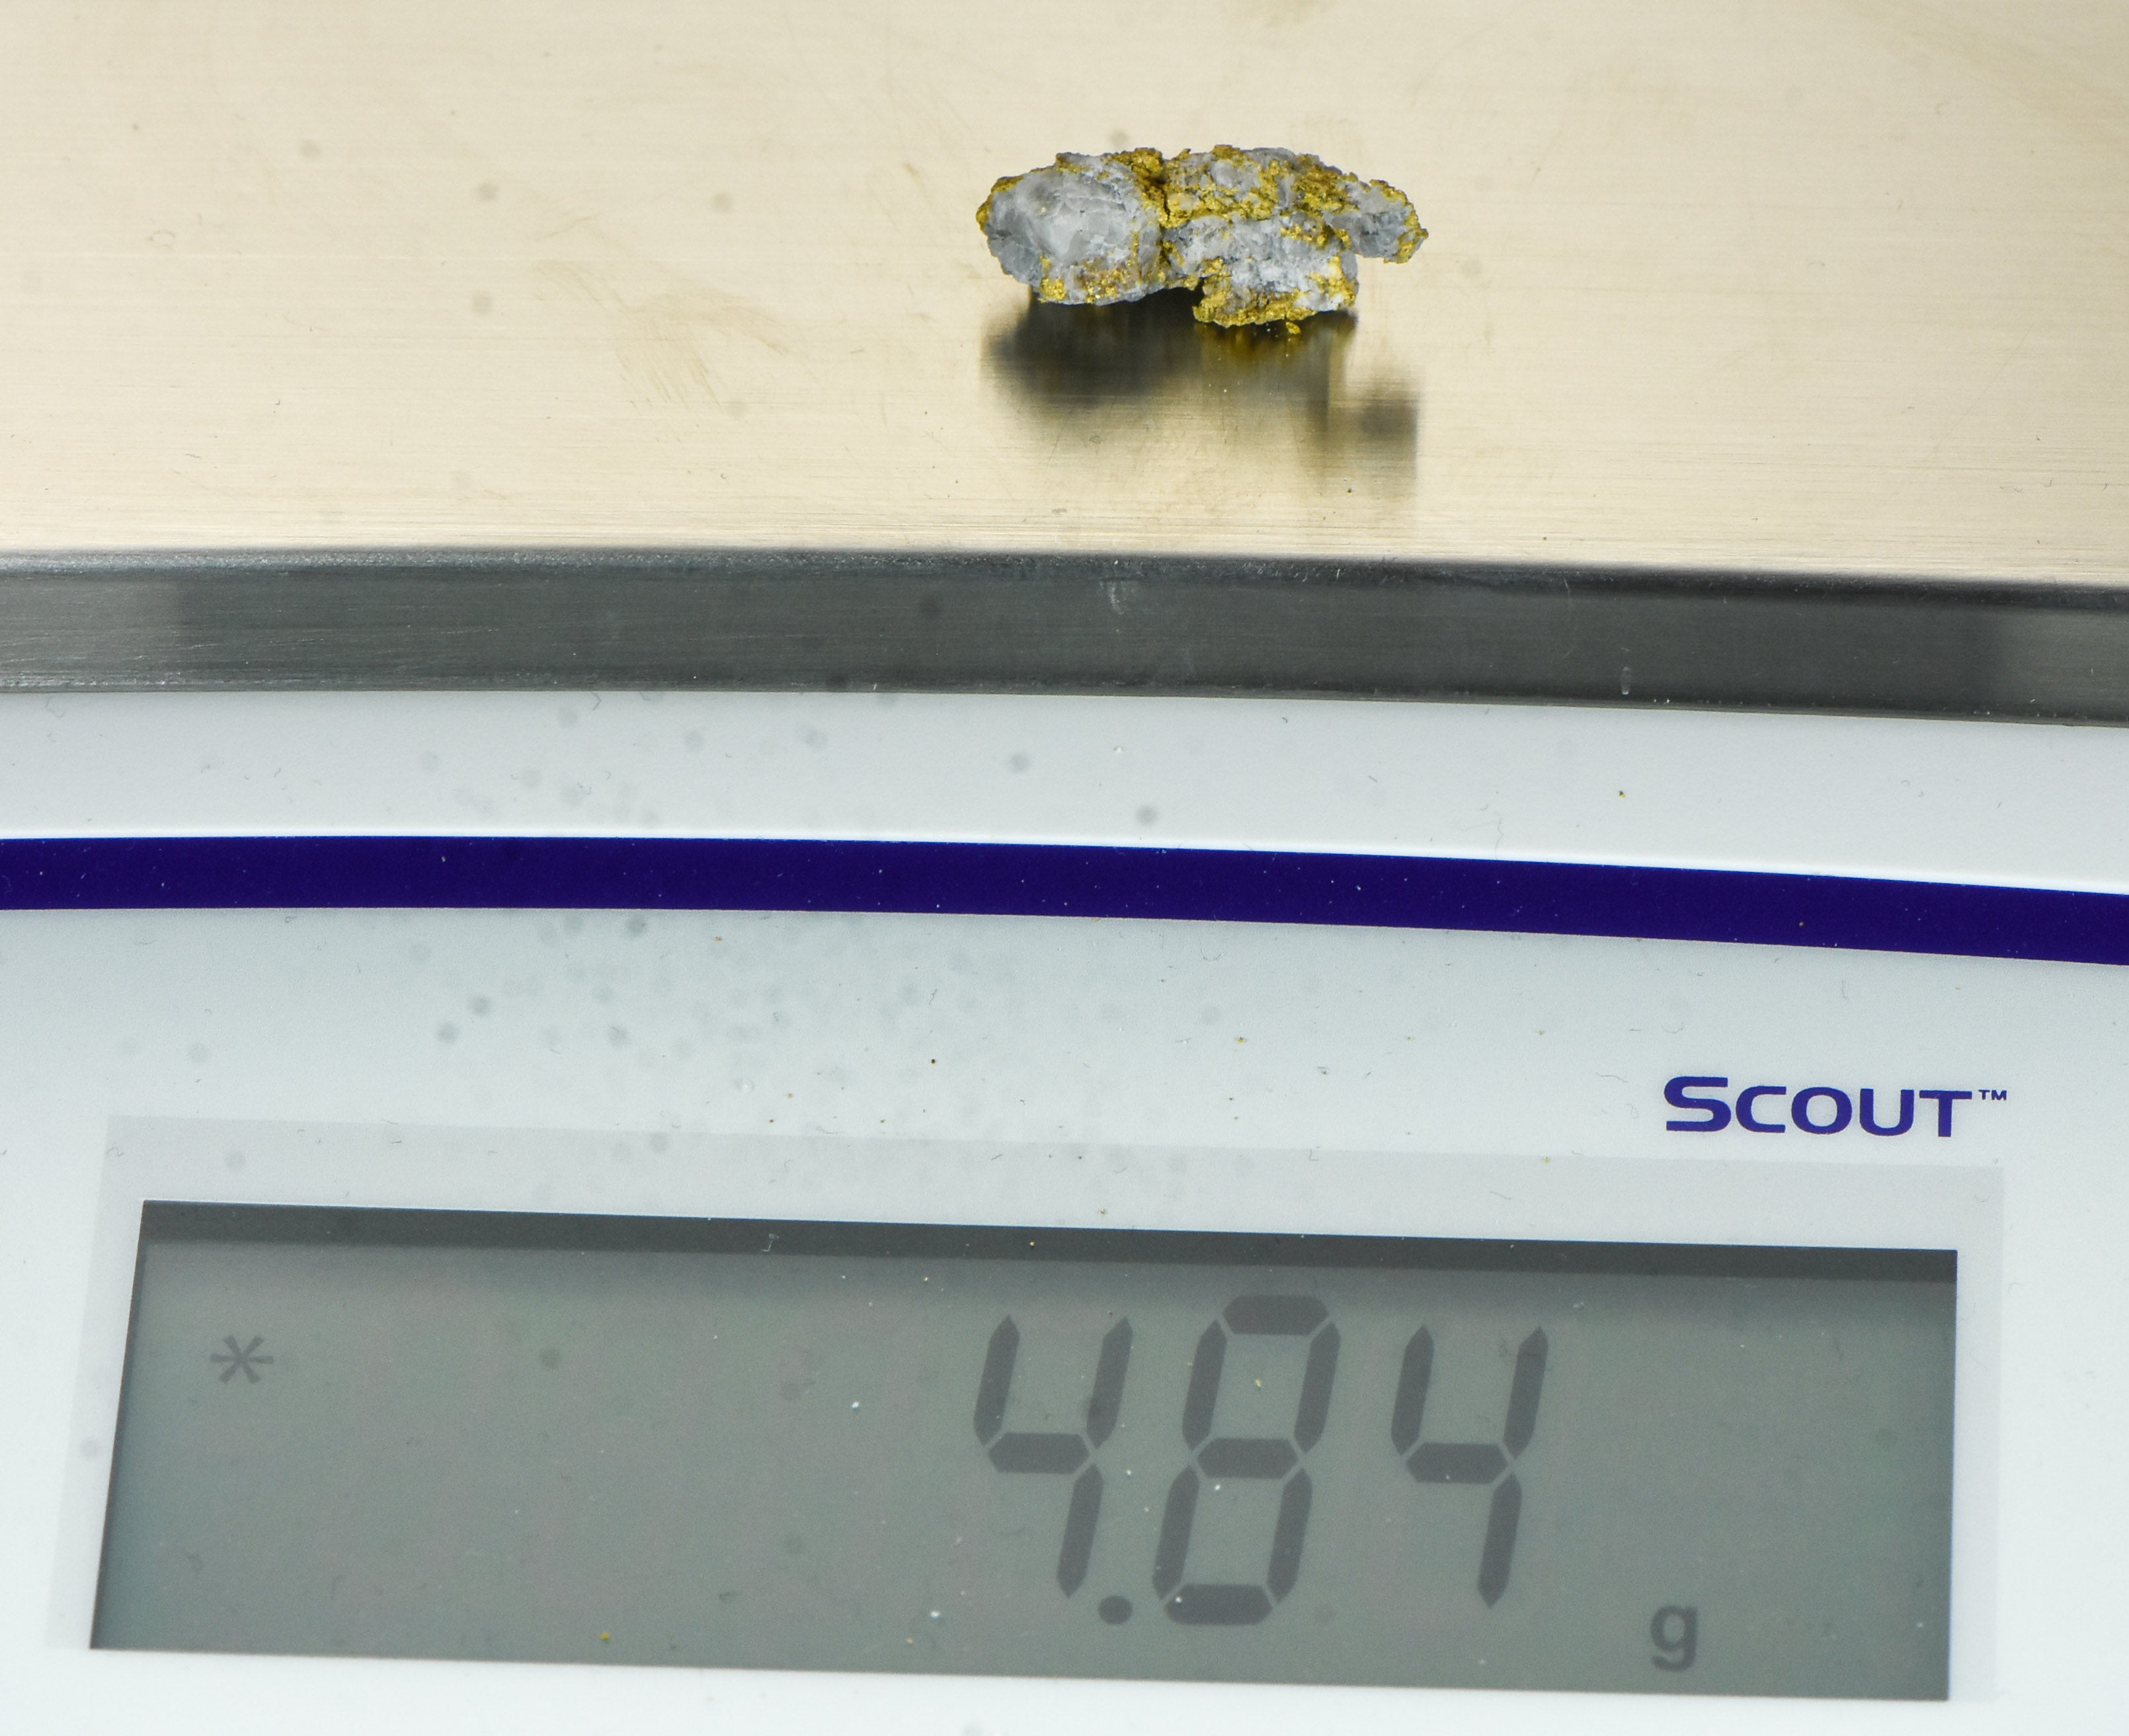 #OM-69 Crystalline Gold Nugget Specimen 4.84 Grams Oriental Mine Sierra County California Rare